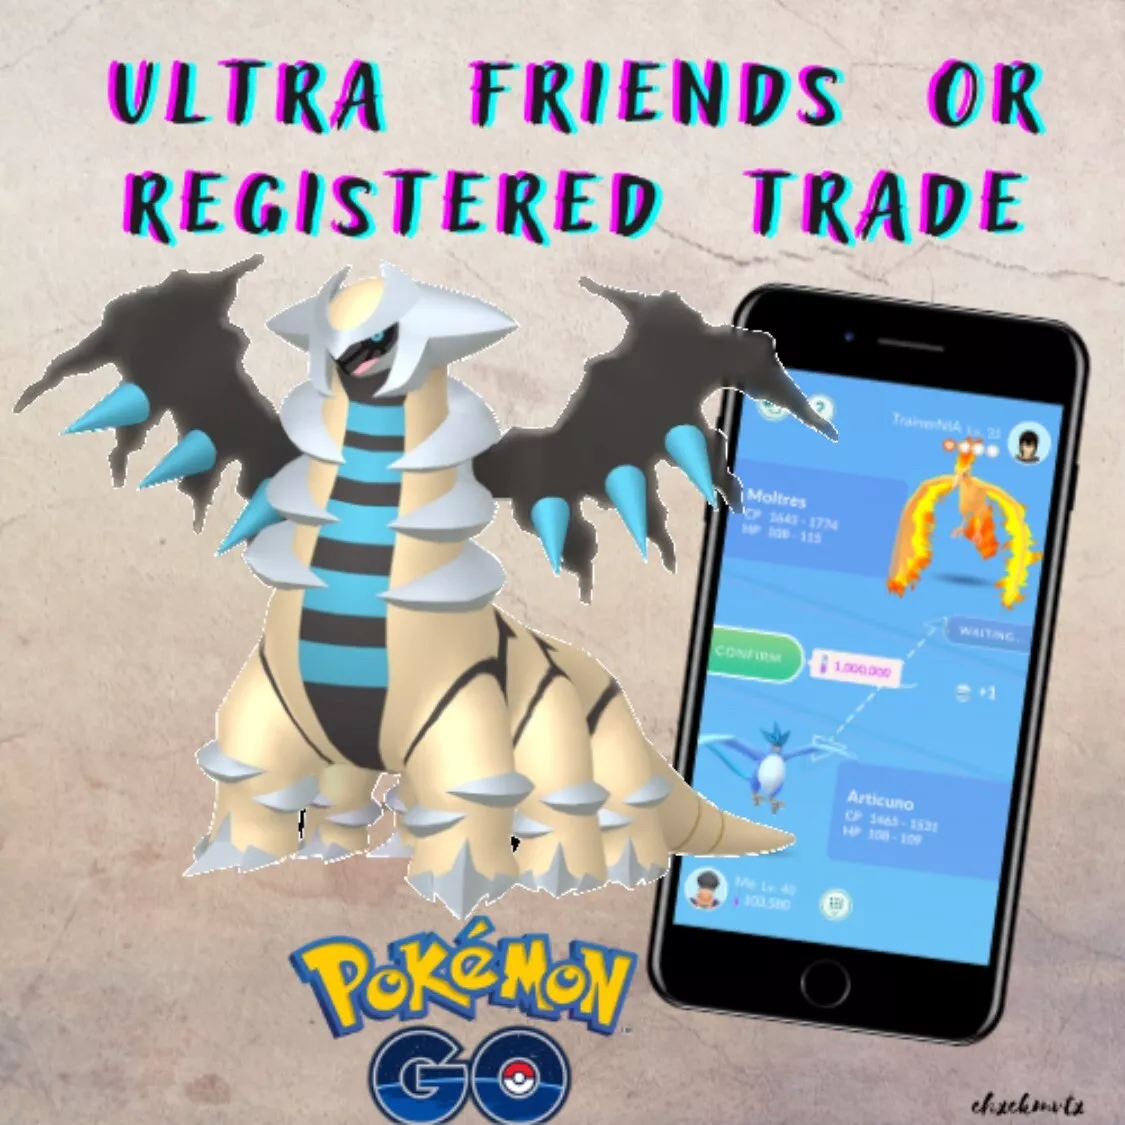 Shiny Giratina Origin Forme Is Live In Pokémon GO